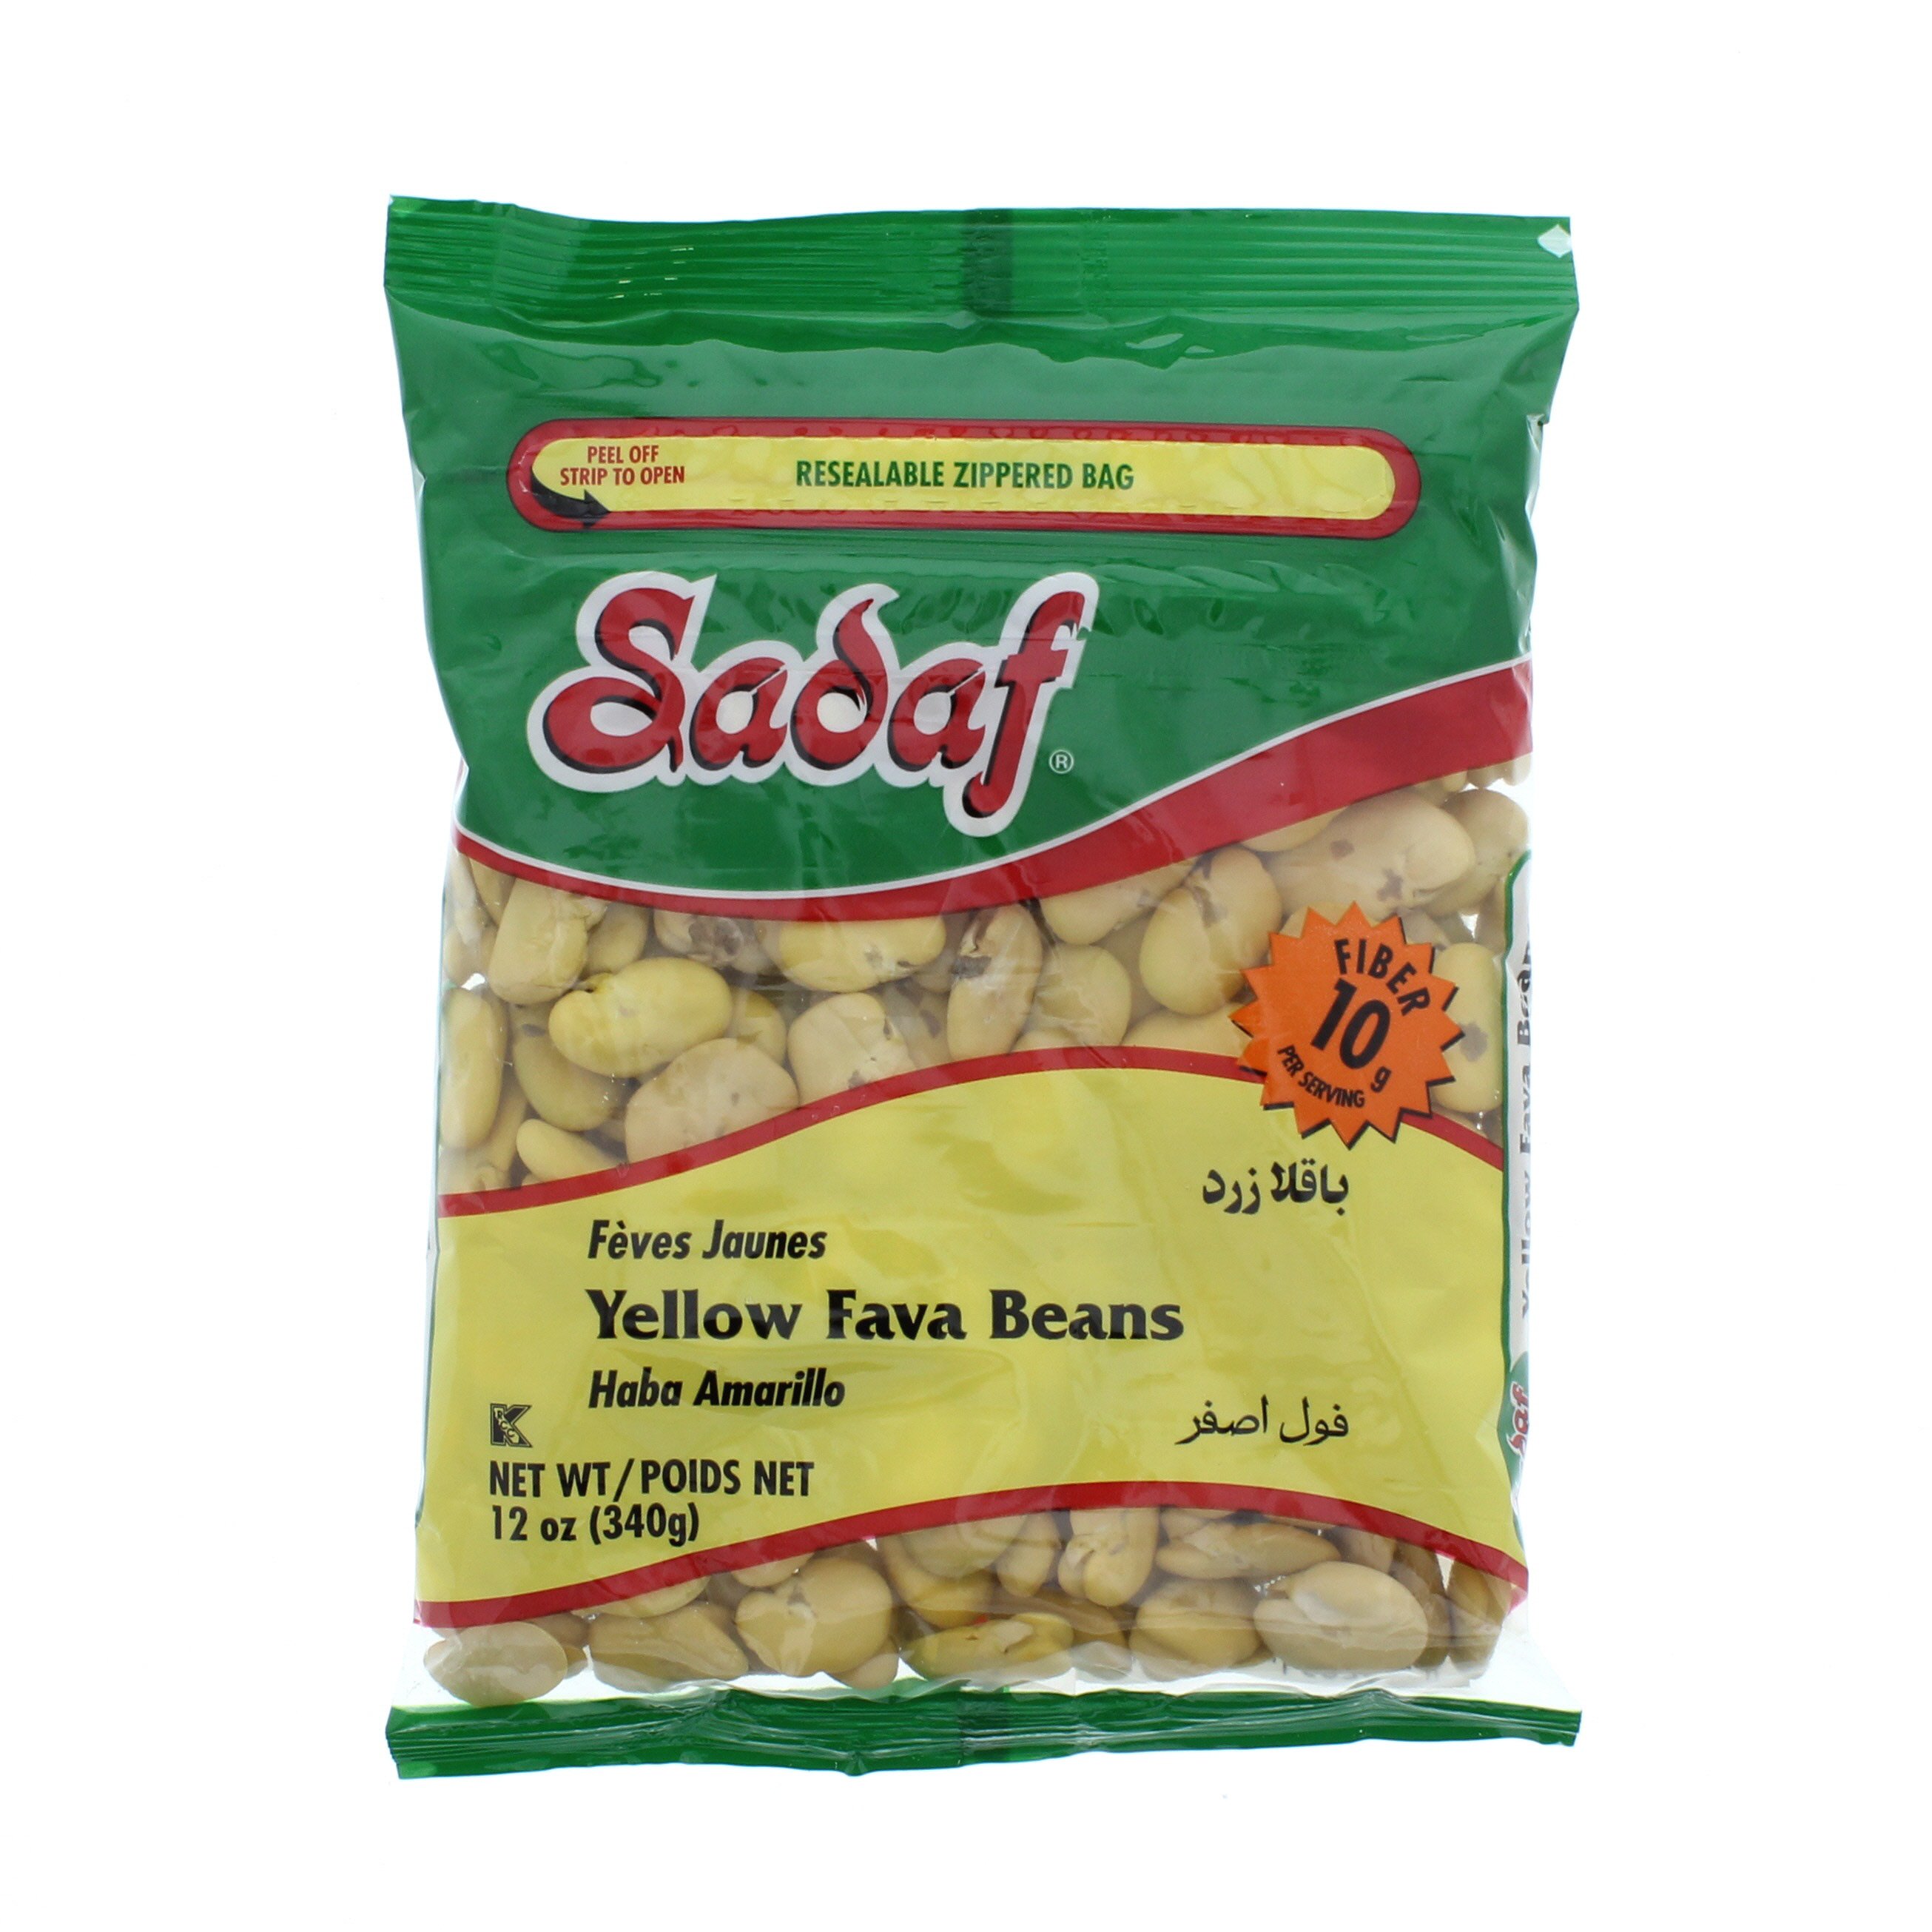 Habas (Peeled Fava Beans)